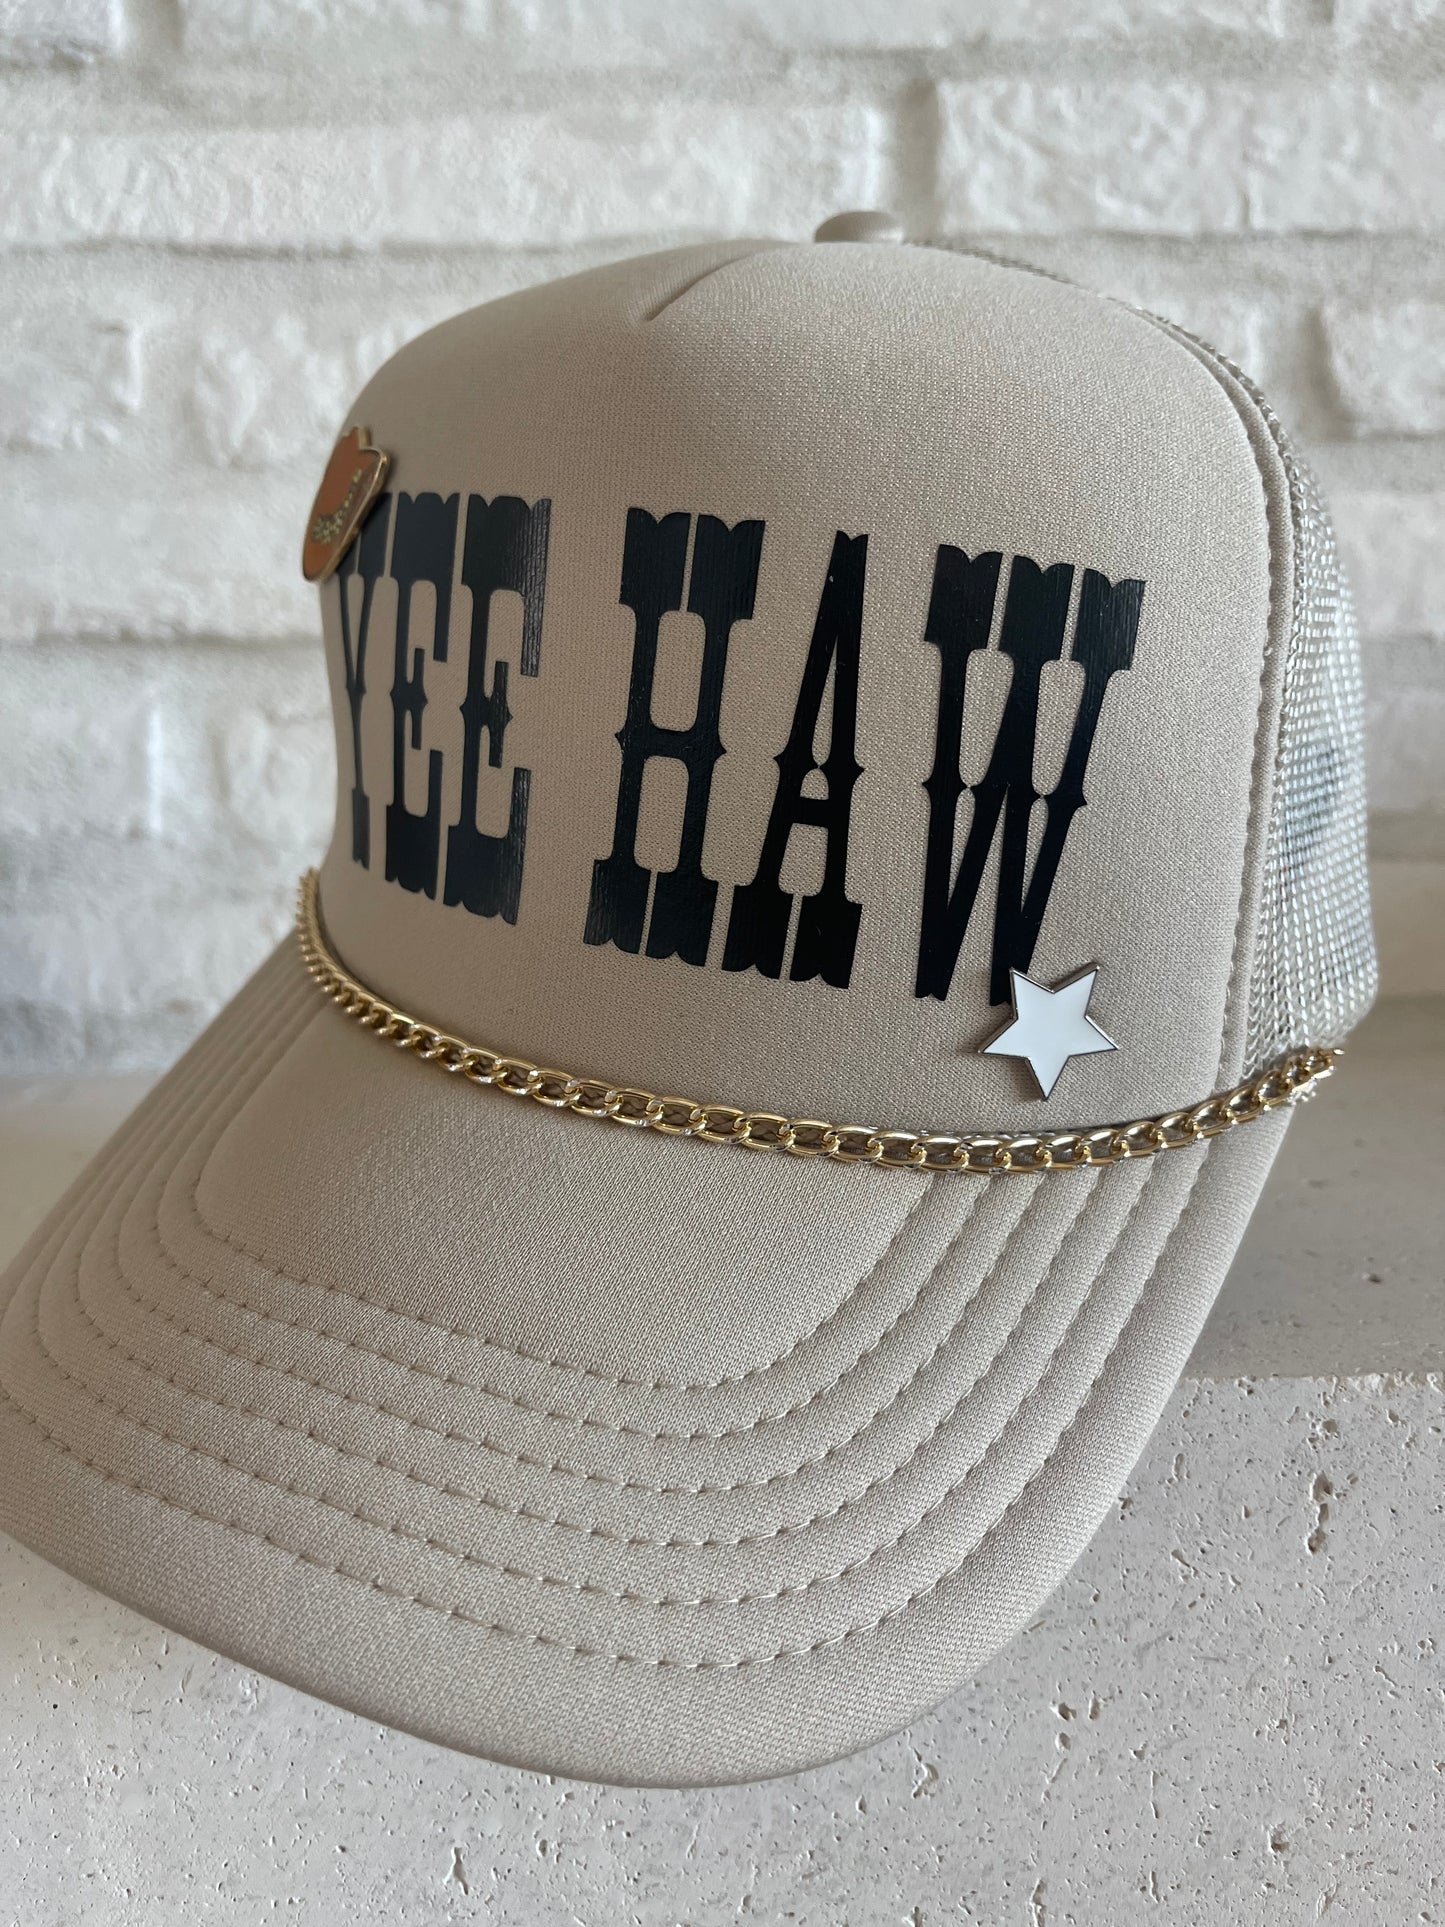 yeehaw trucker hat customized